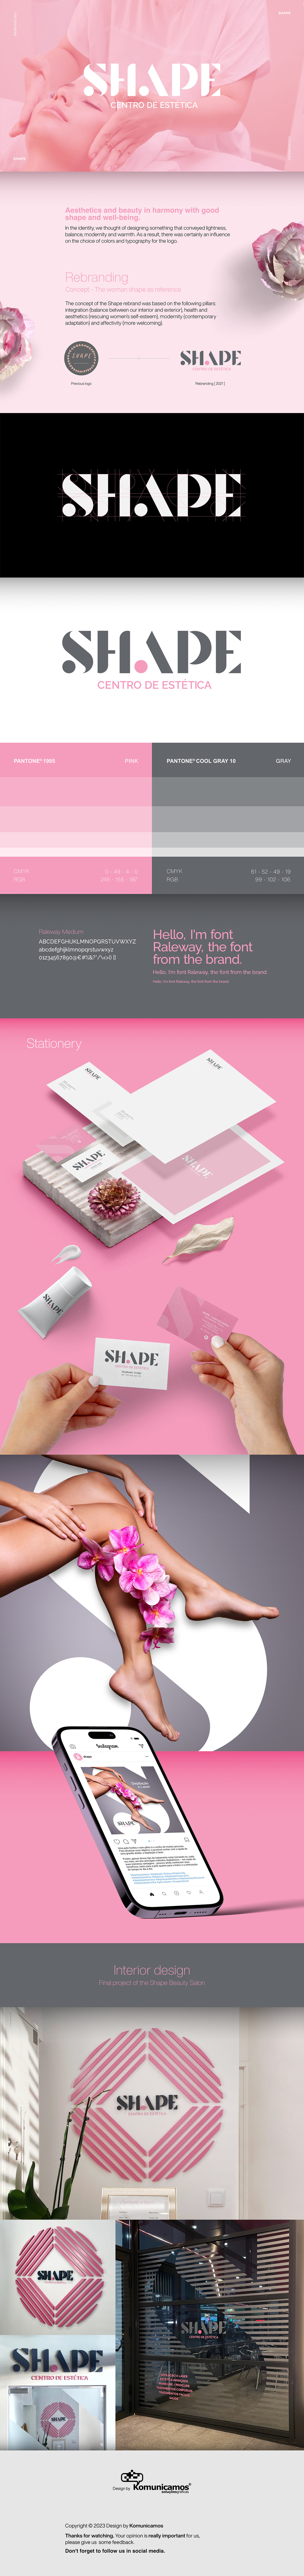 rebranding brand identity visual identity Logotype beauty salon